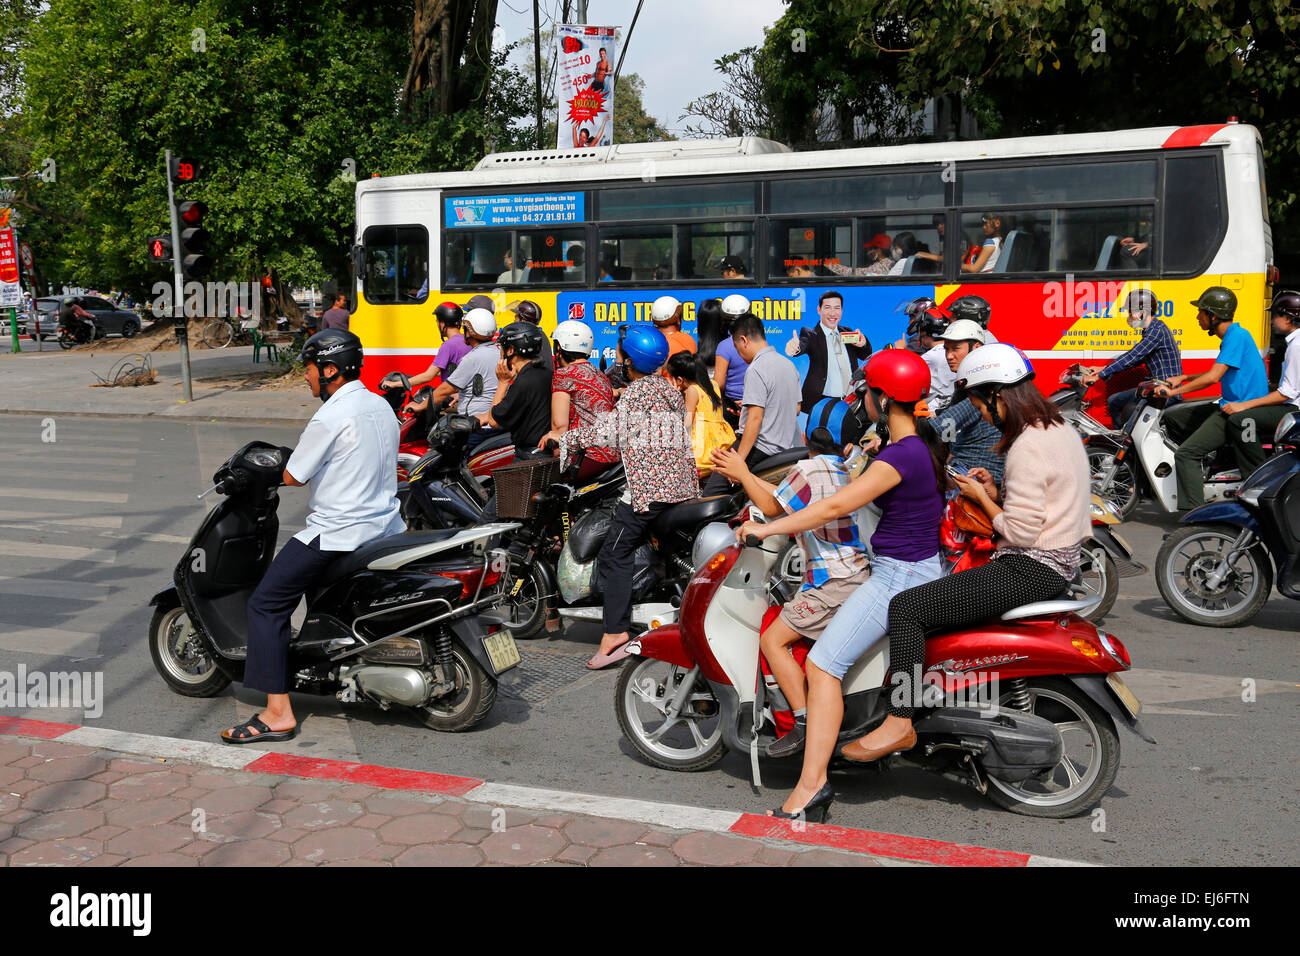 Traffic stopped at lights in Hanoi, Vietnam Stock Photo